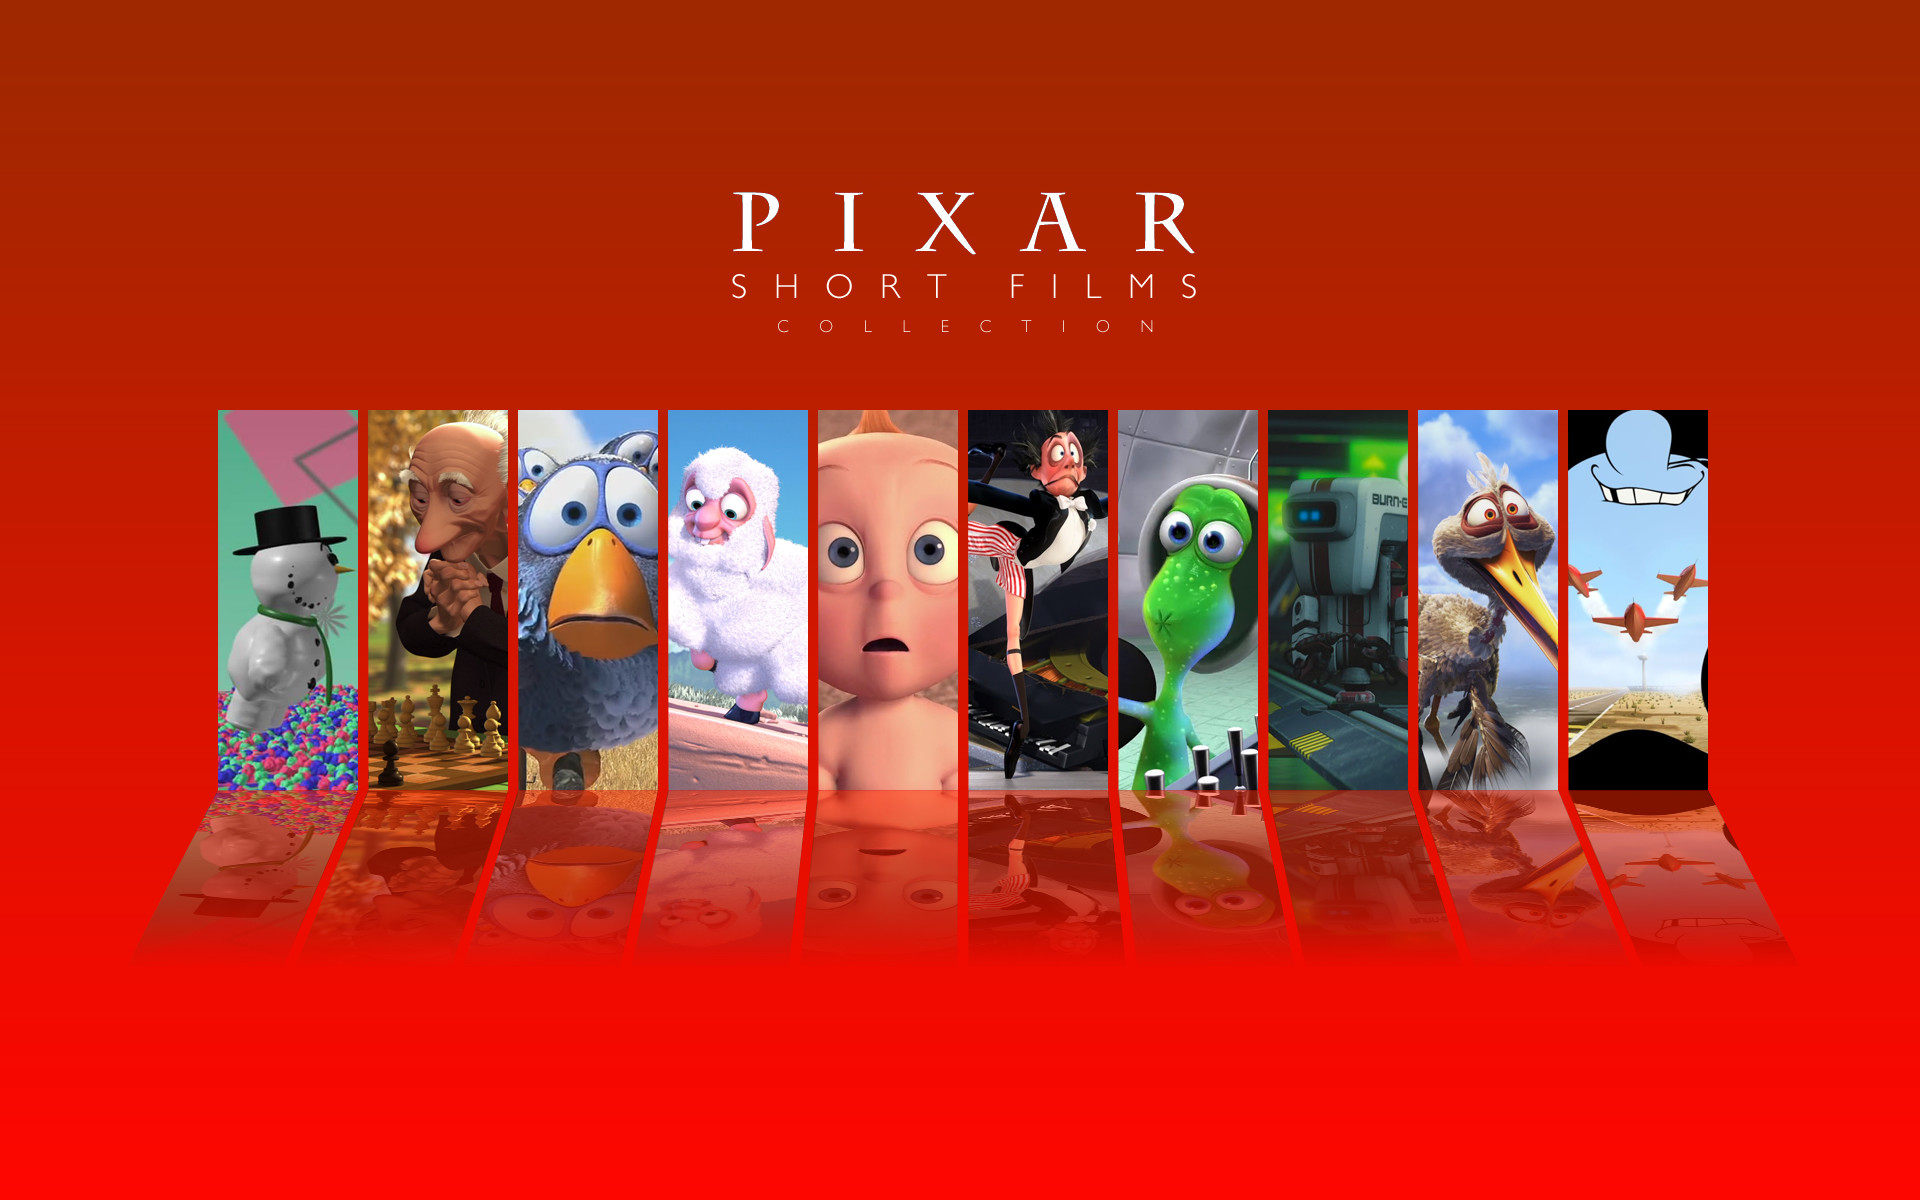 1920x1200 ... hd wallpapers 1920x1080 pixar animations on pinterest pixar movies disney  pixar ...